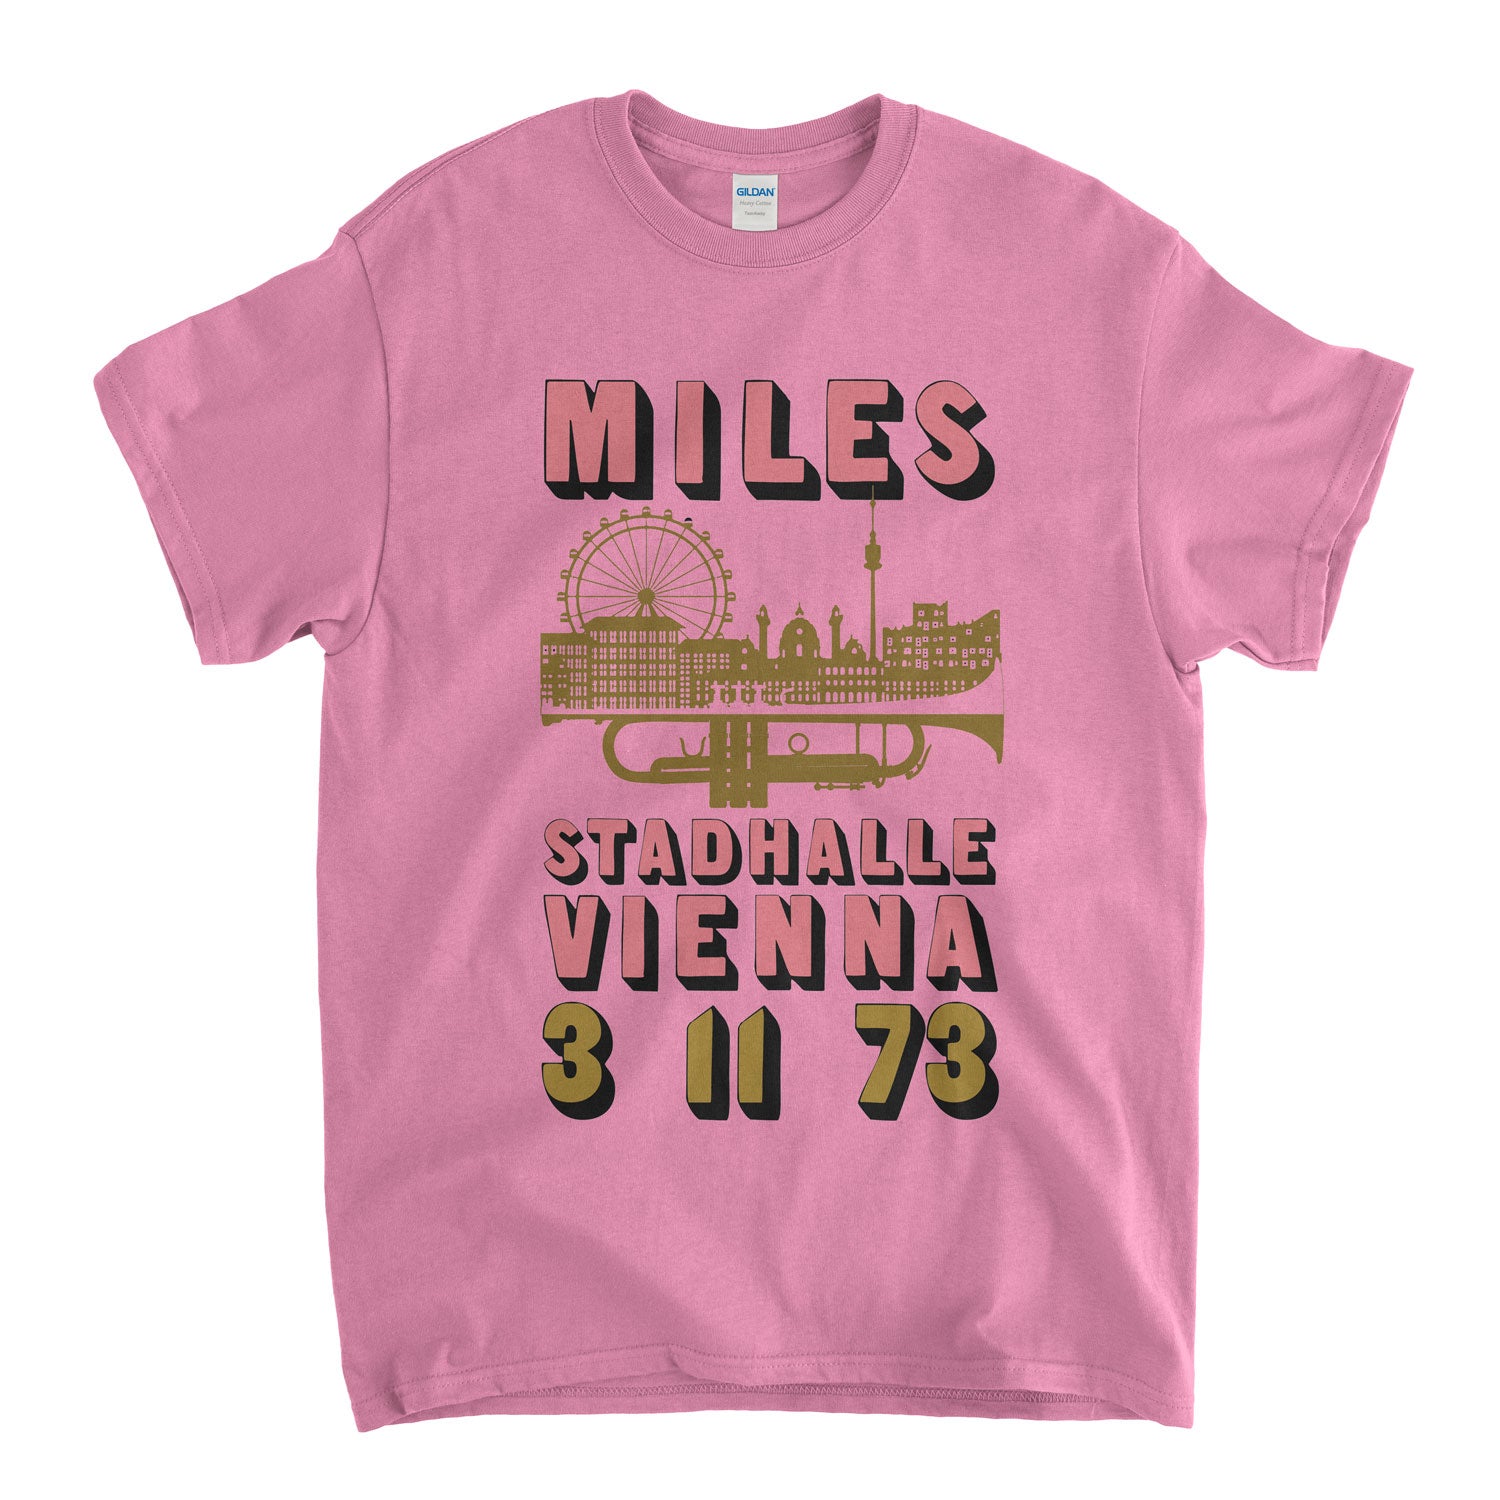 Miles Vienna 73 Poster T shirt Classic Jazz Inspired Design